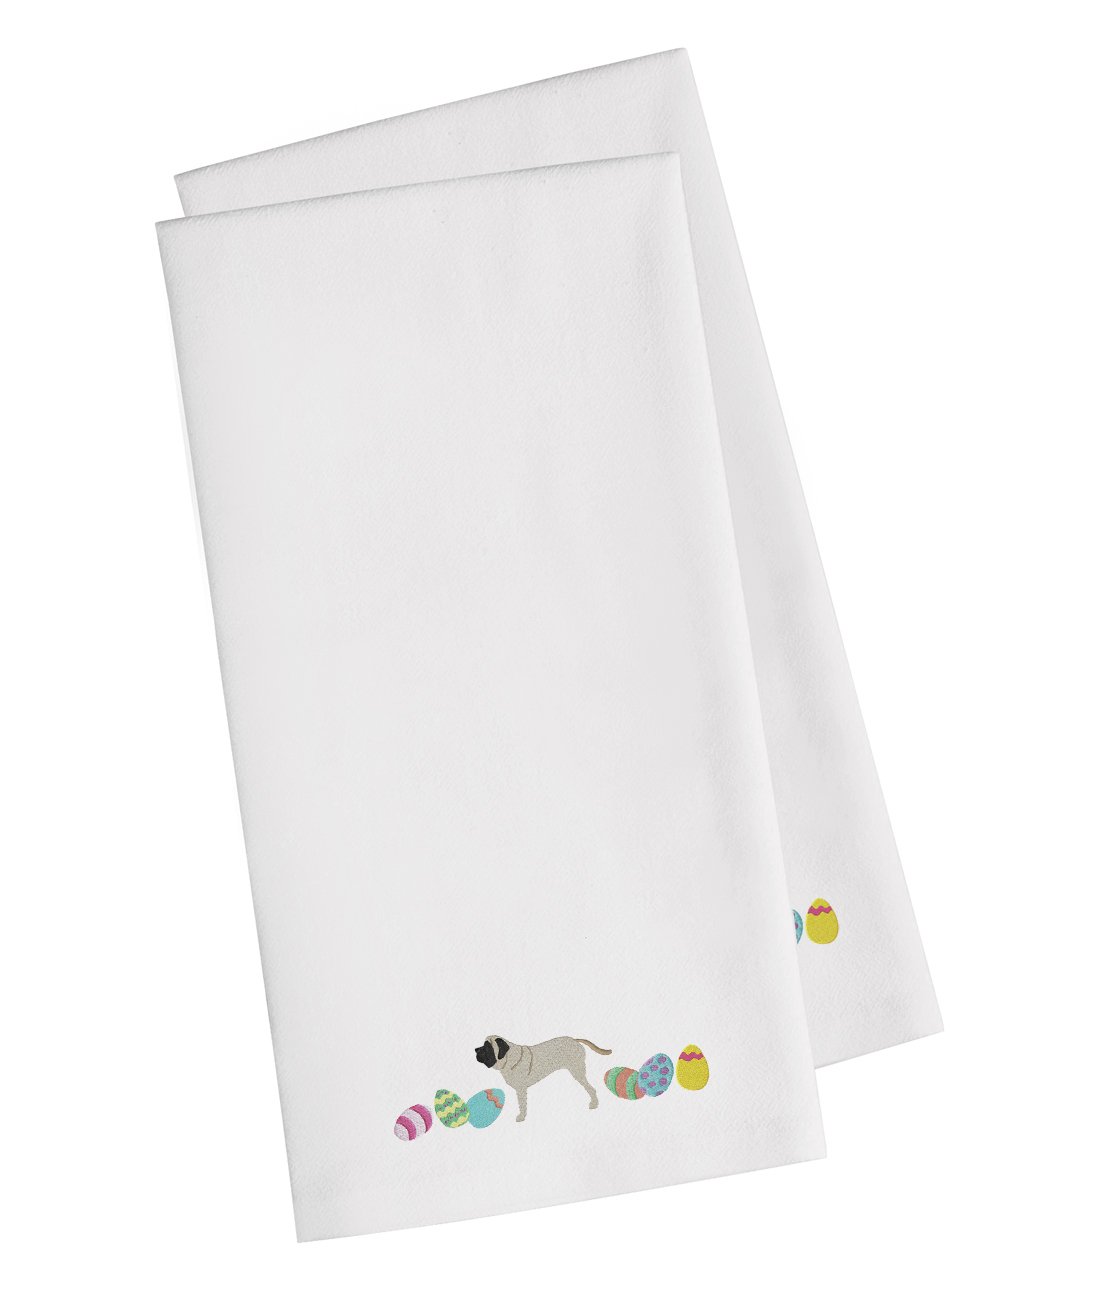 English Mastiff Easter White Embroidered Kitchen Towel Set of 2 CK1638WHTWE by Caroline's Treasures